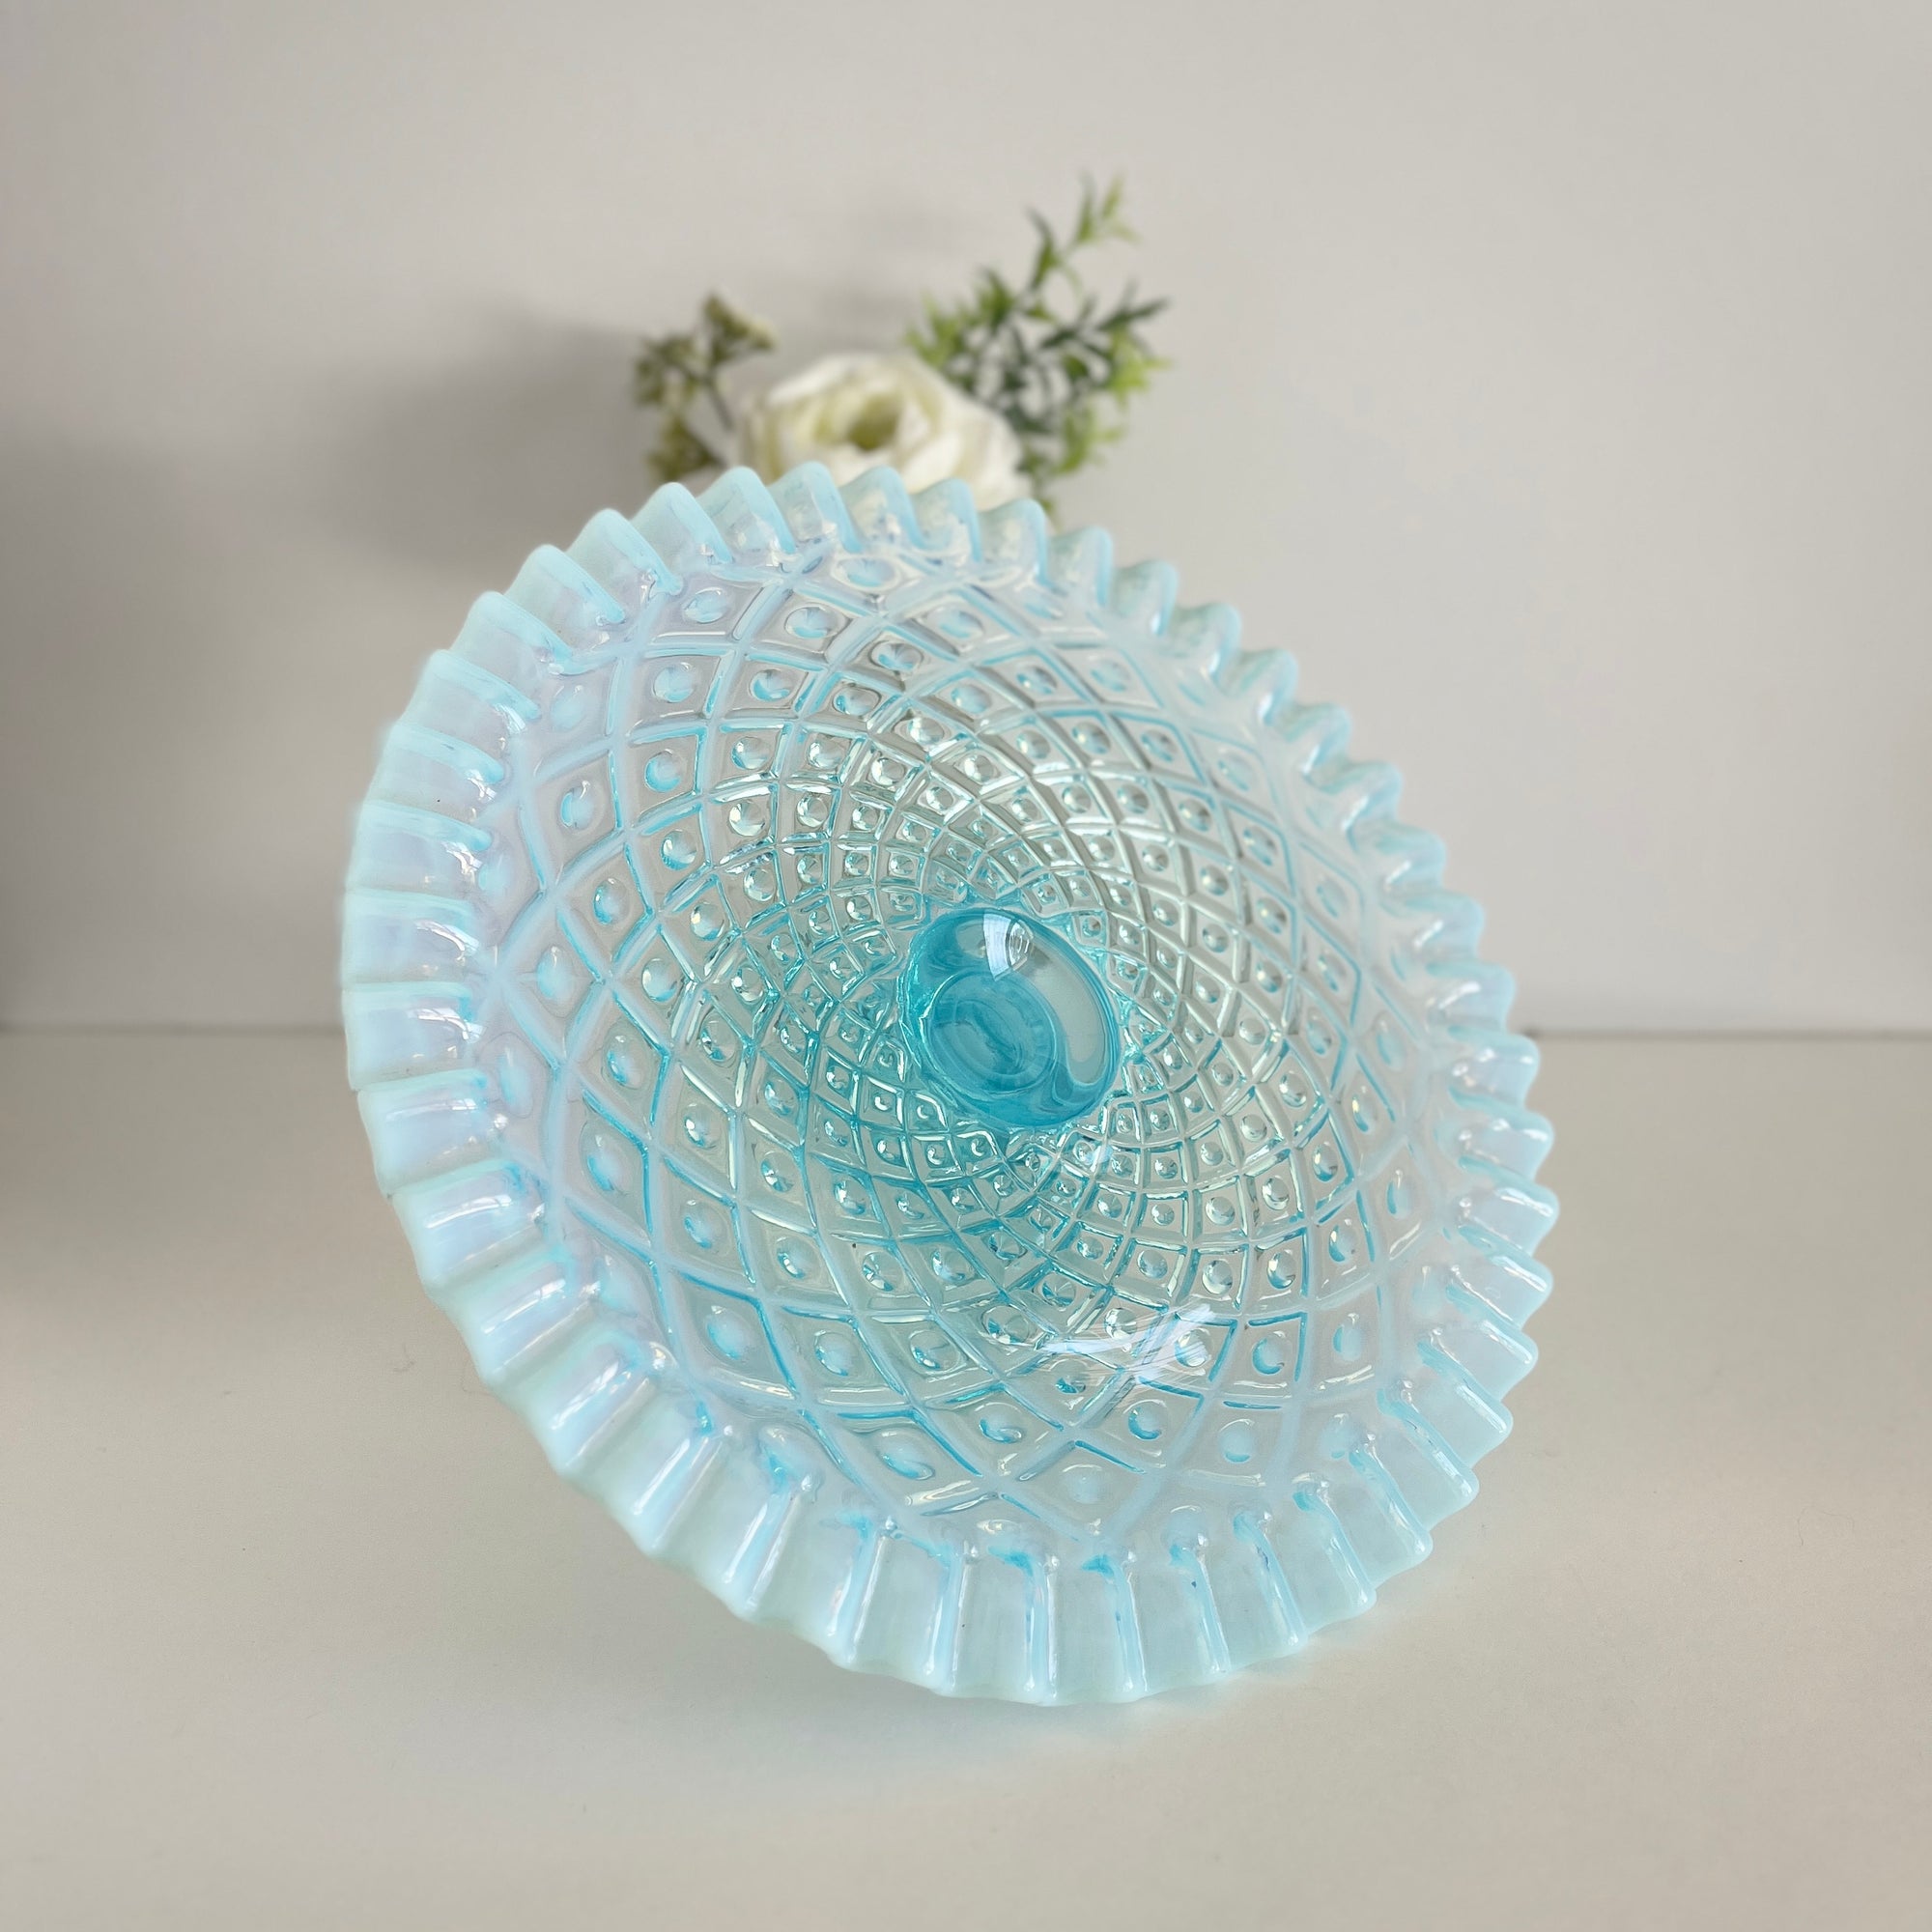 Fenton Blue Opalescent Cake Plate in 'Diamond Lace' Pattern